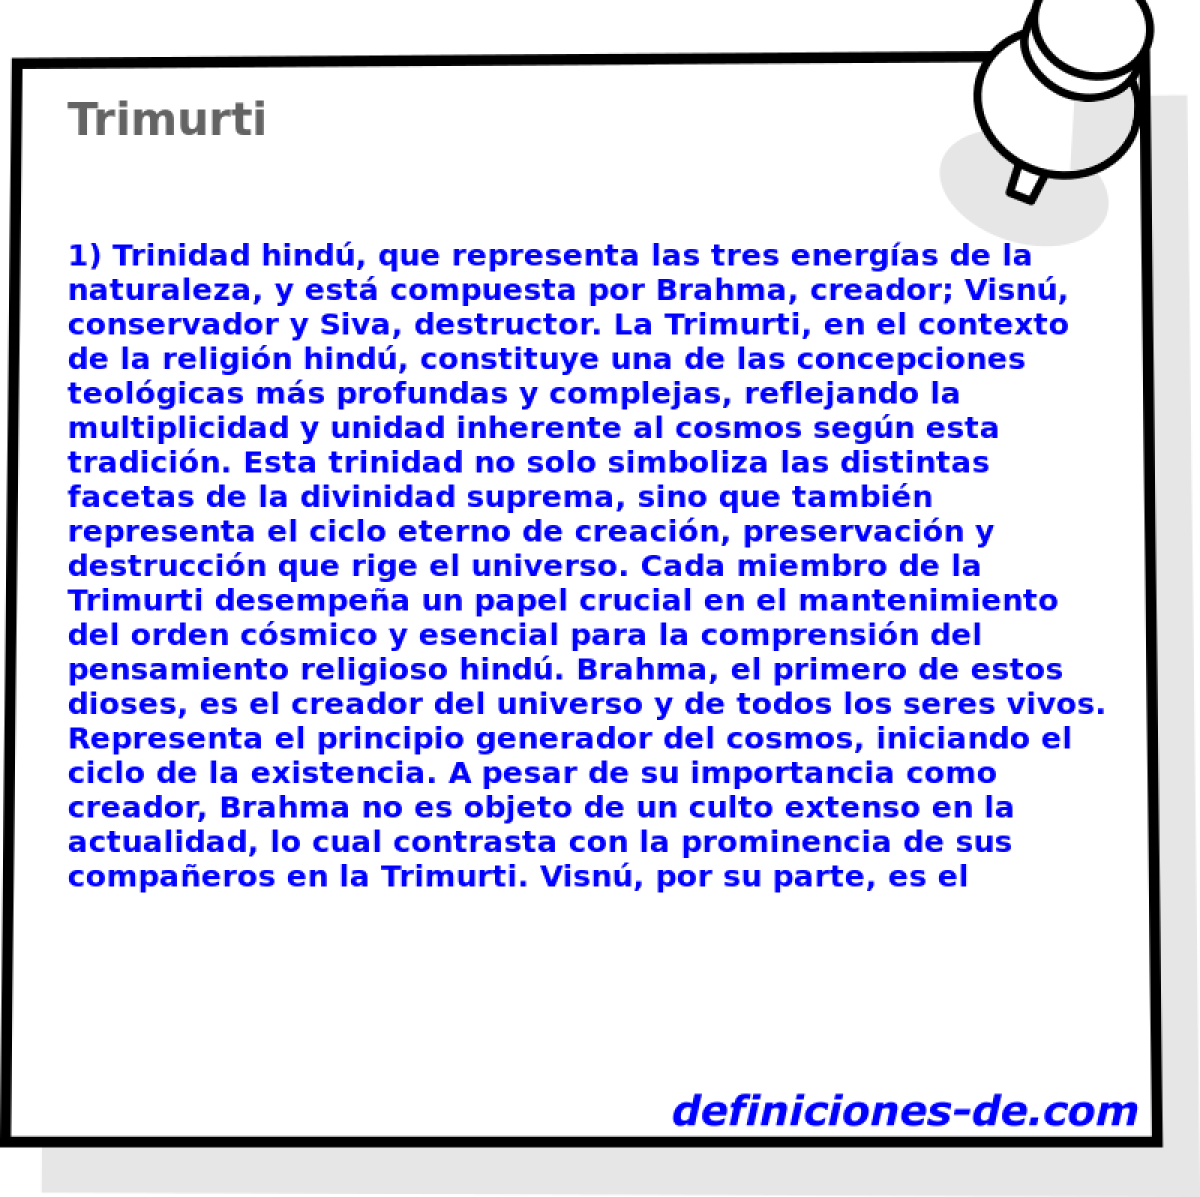 Trimurti 